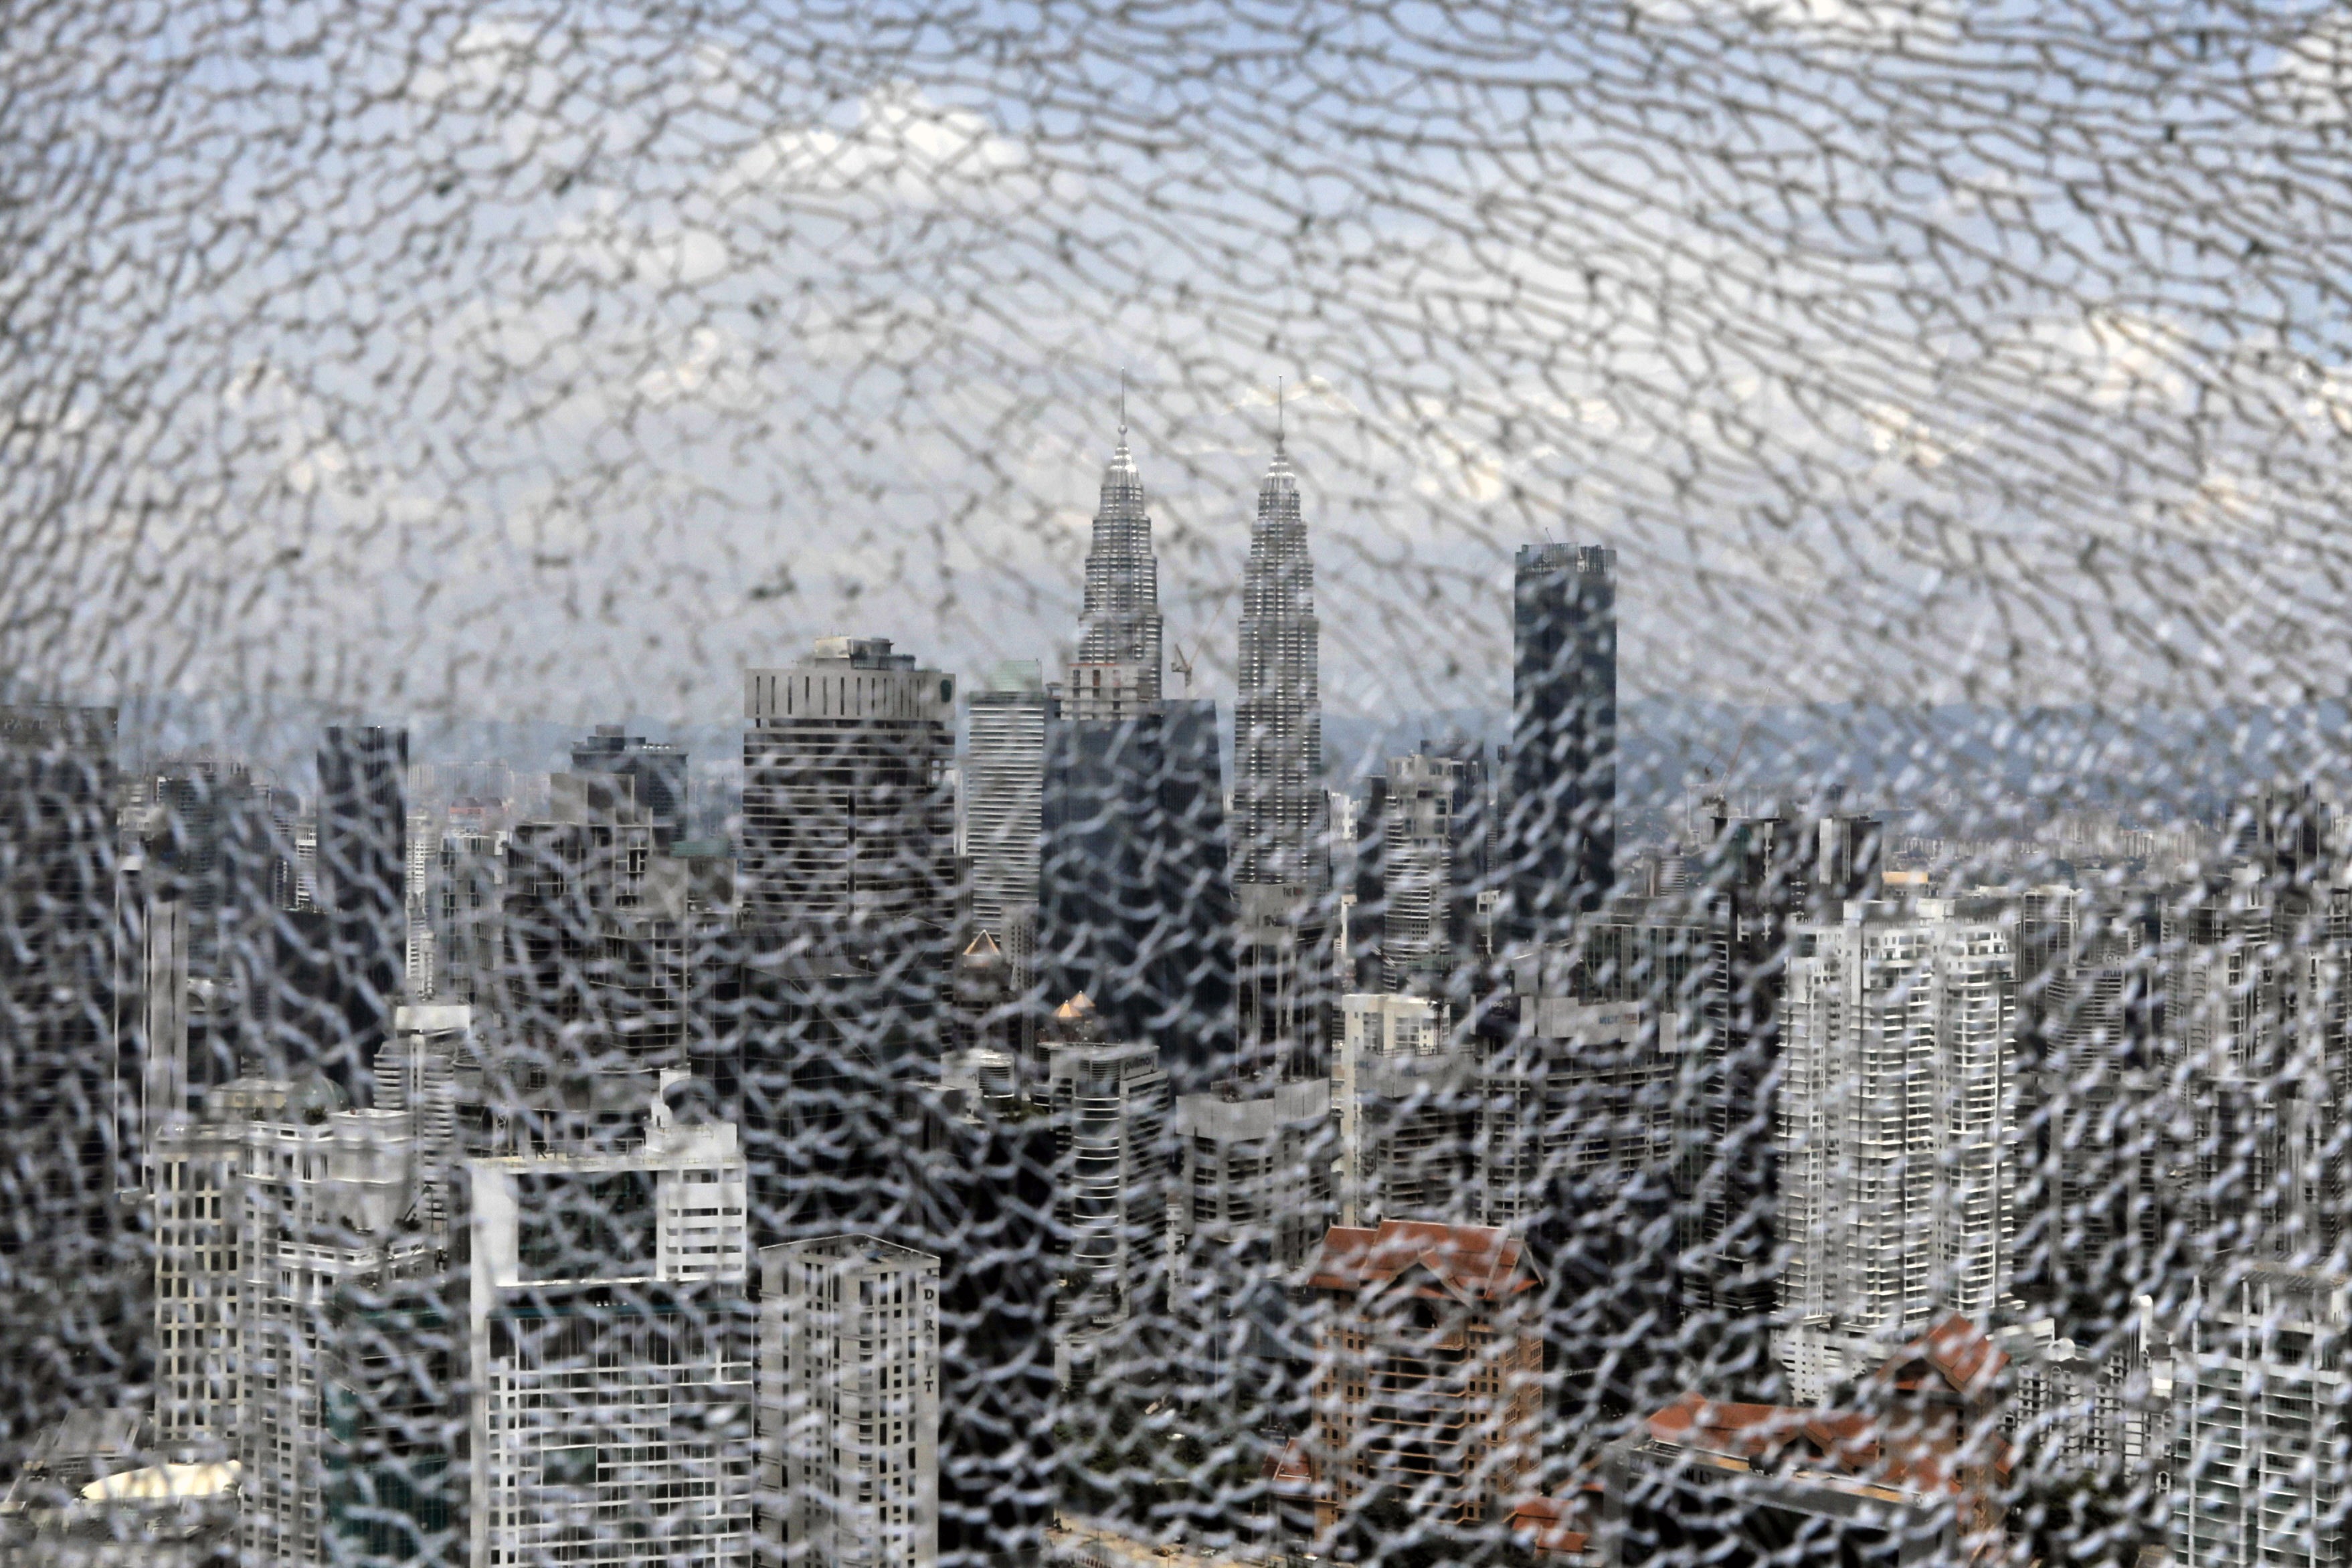 The Kuala Lumpur skyline, as seen through a cracked glass pane. Photo: Bloomberg